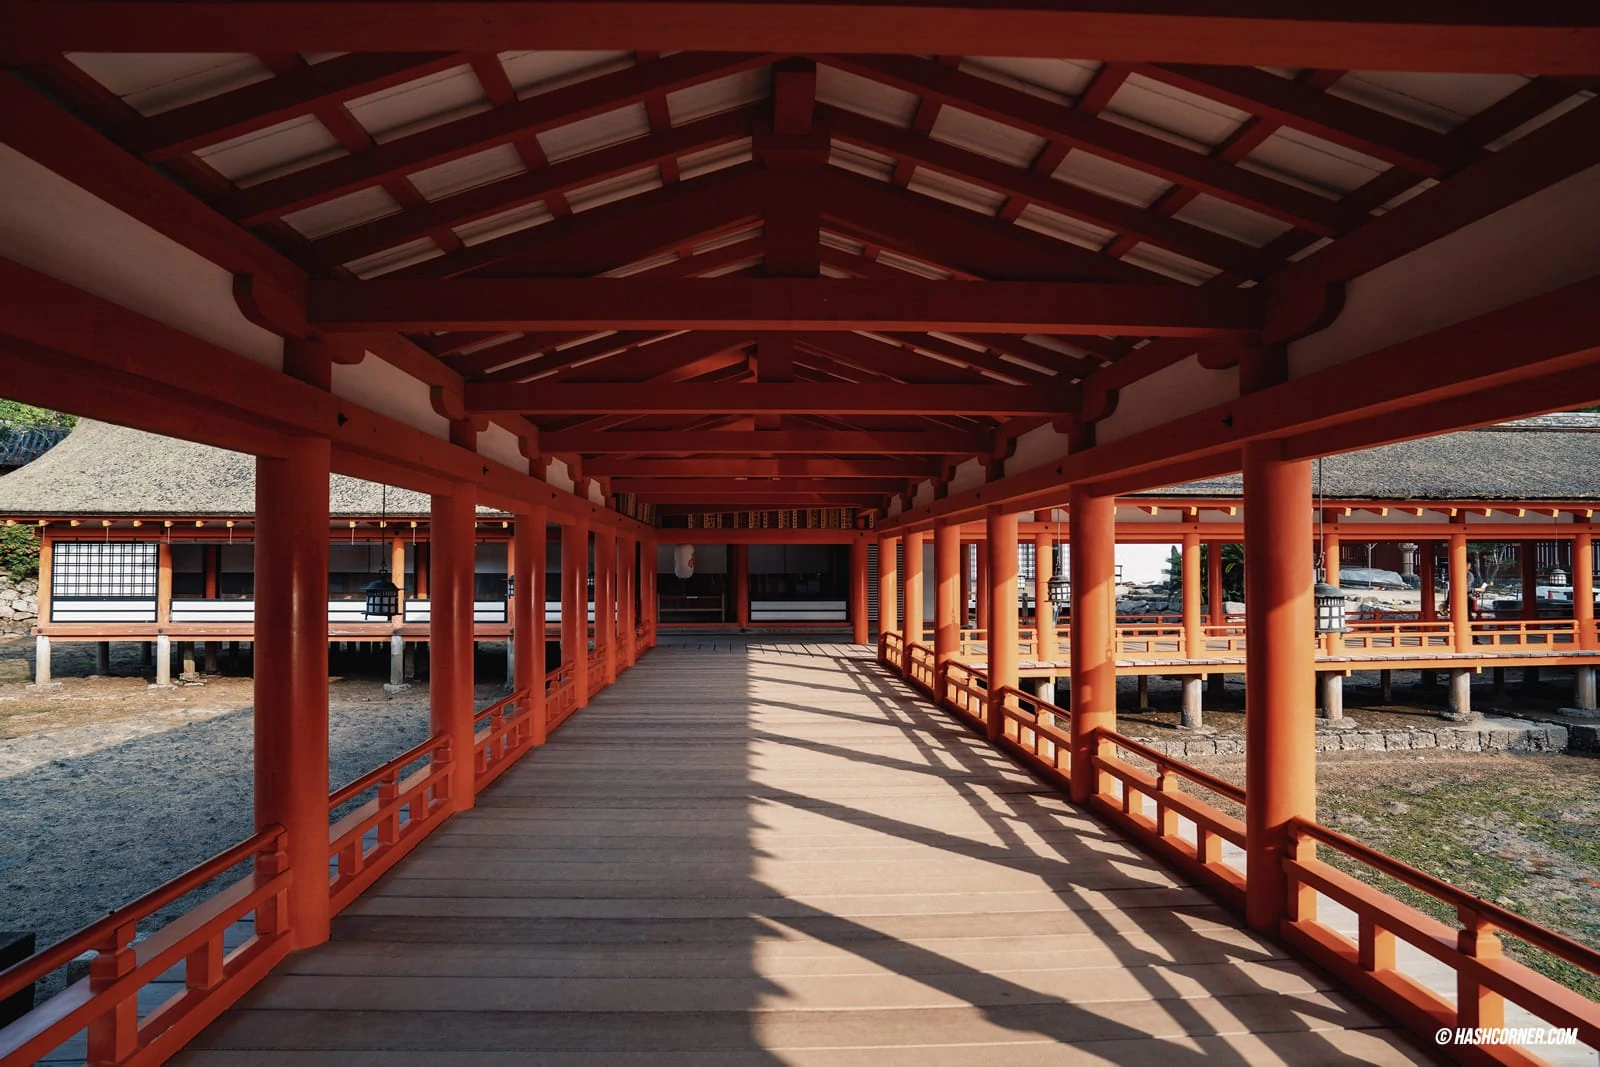 Miyajima Island Travel Review: Discovering The Iconic Torii Gate of Sacred Island